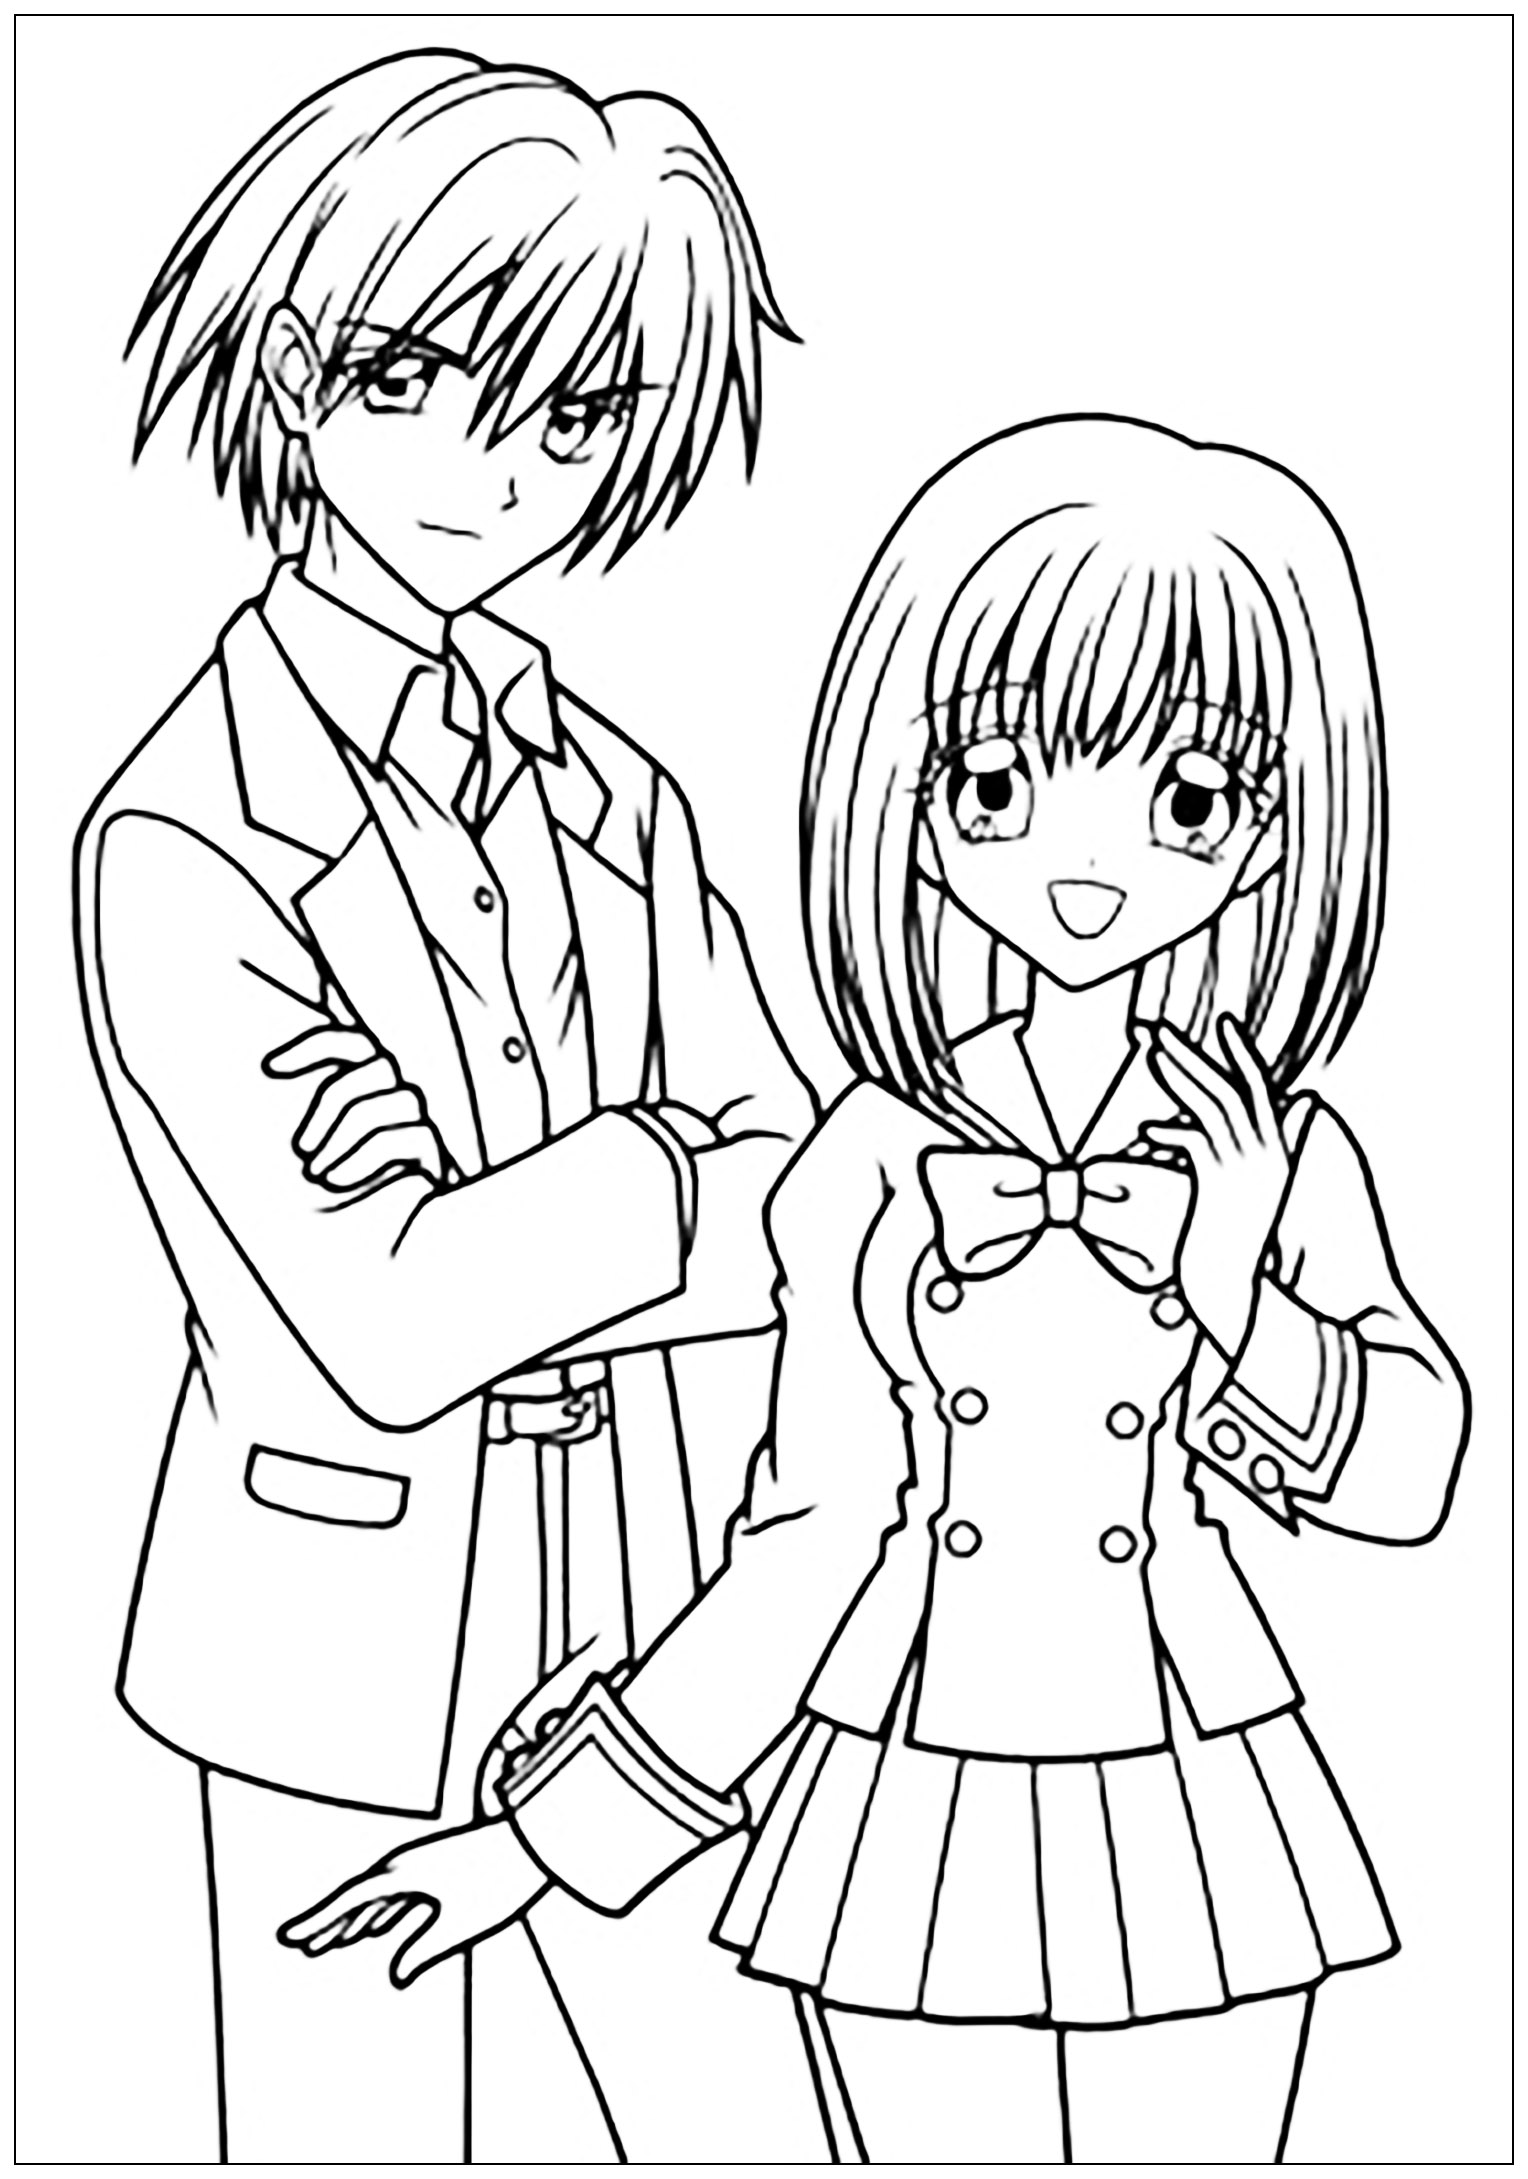 Download Manga drawing boy and girl in school suit - Manga / Anime ...